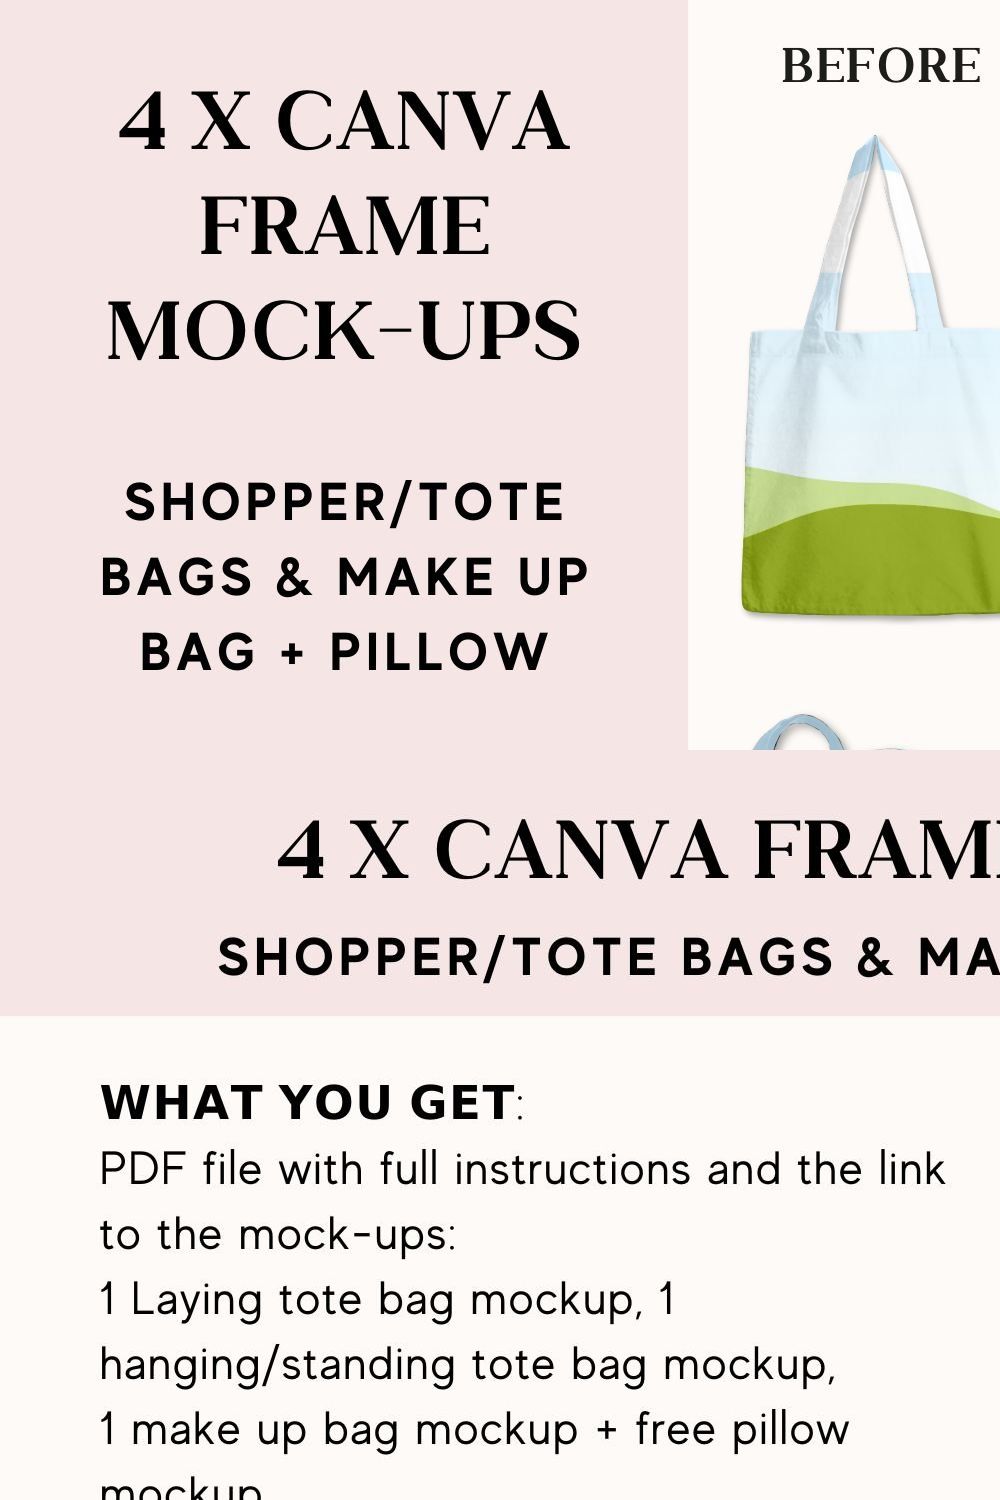 Canva Tote bag makeup bag mock-ups pinterest preview image.